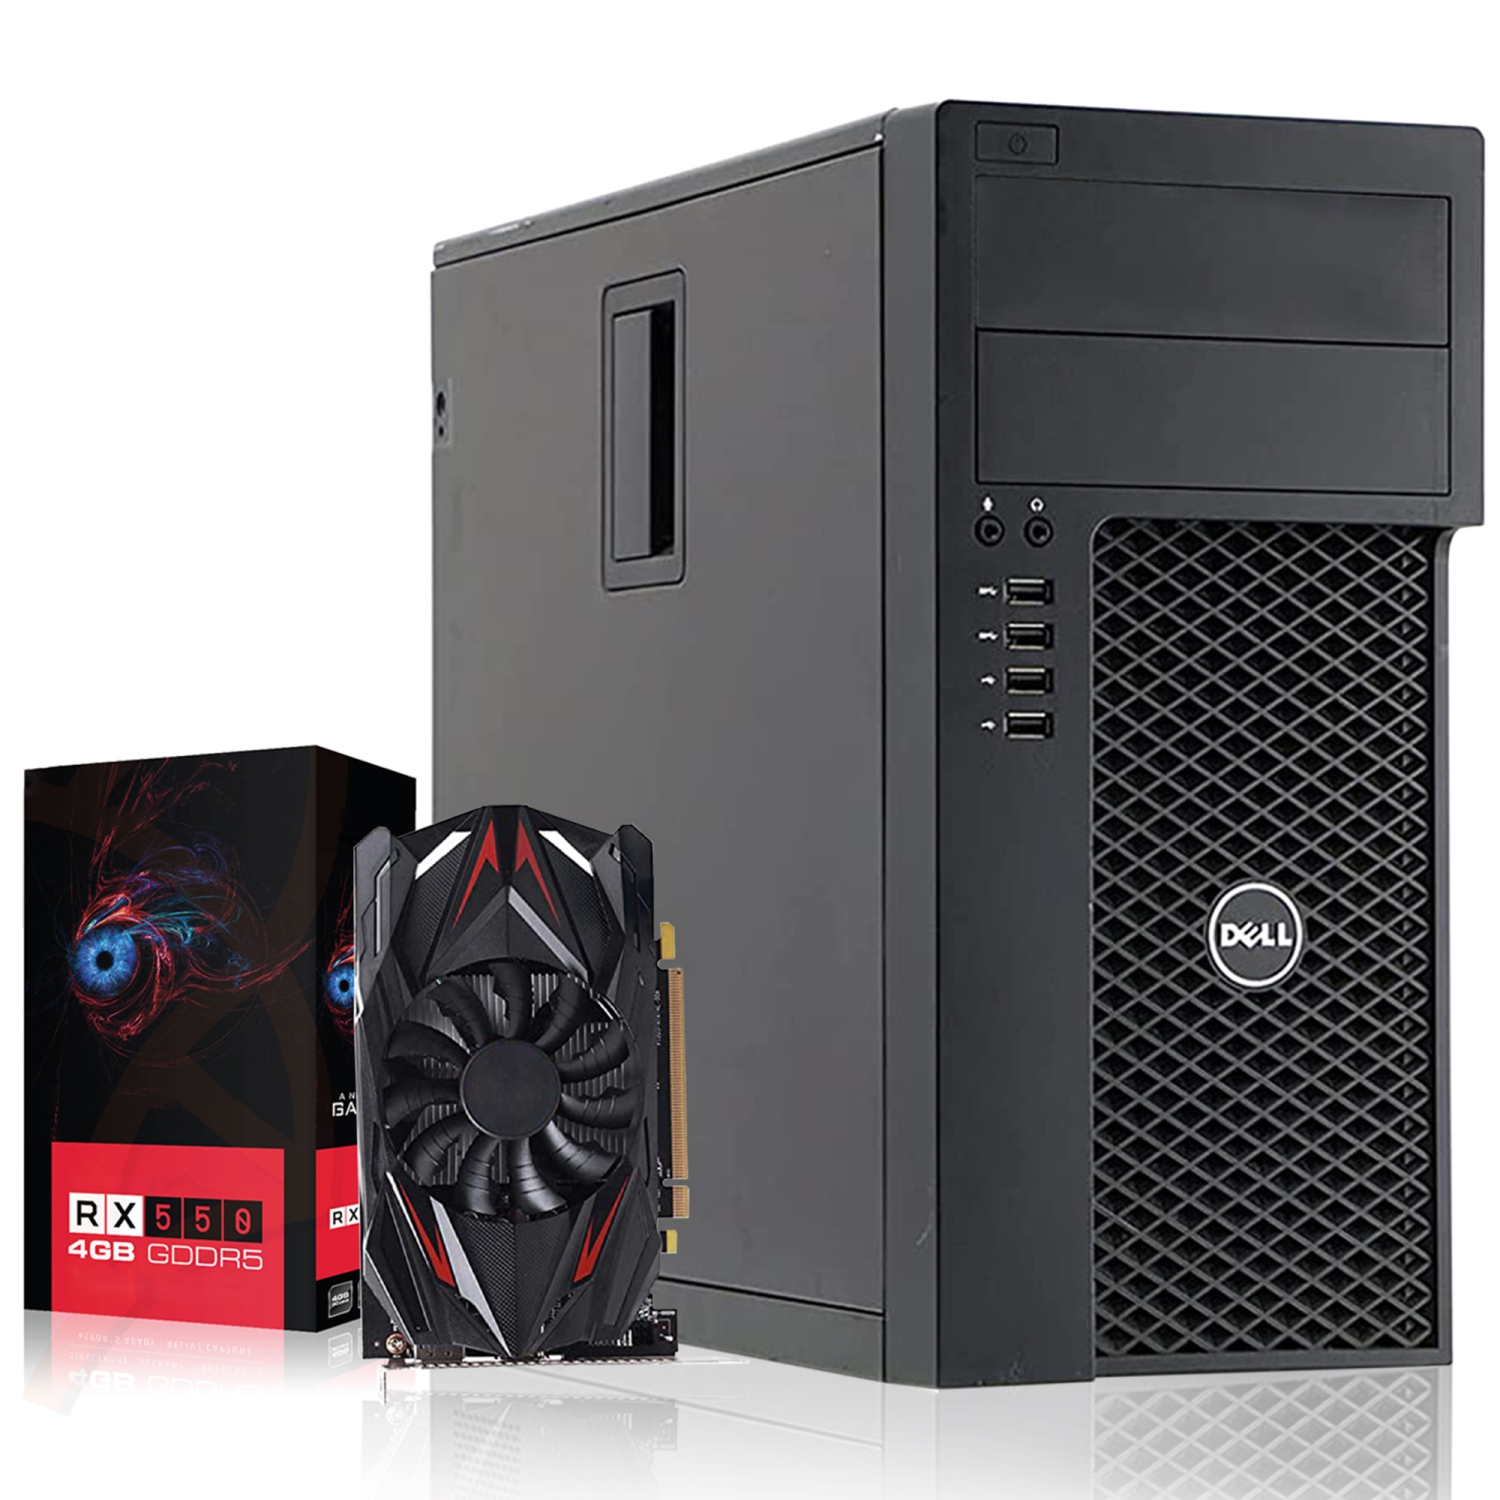 Refurbished (Good) - Dell Precision T1700 Tower Gaming Desktop Computer PC, (Core i7 - 4770 4th GEN/32GB RAM/512GB SSD/RX 550/WINDOWS 10 PRO) Intel Processor - Black